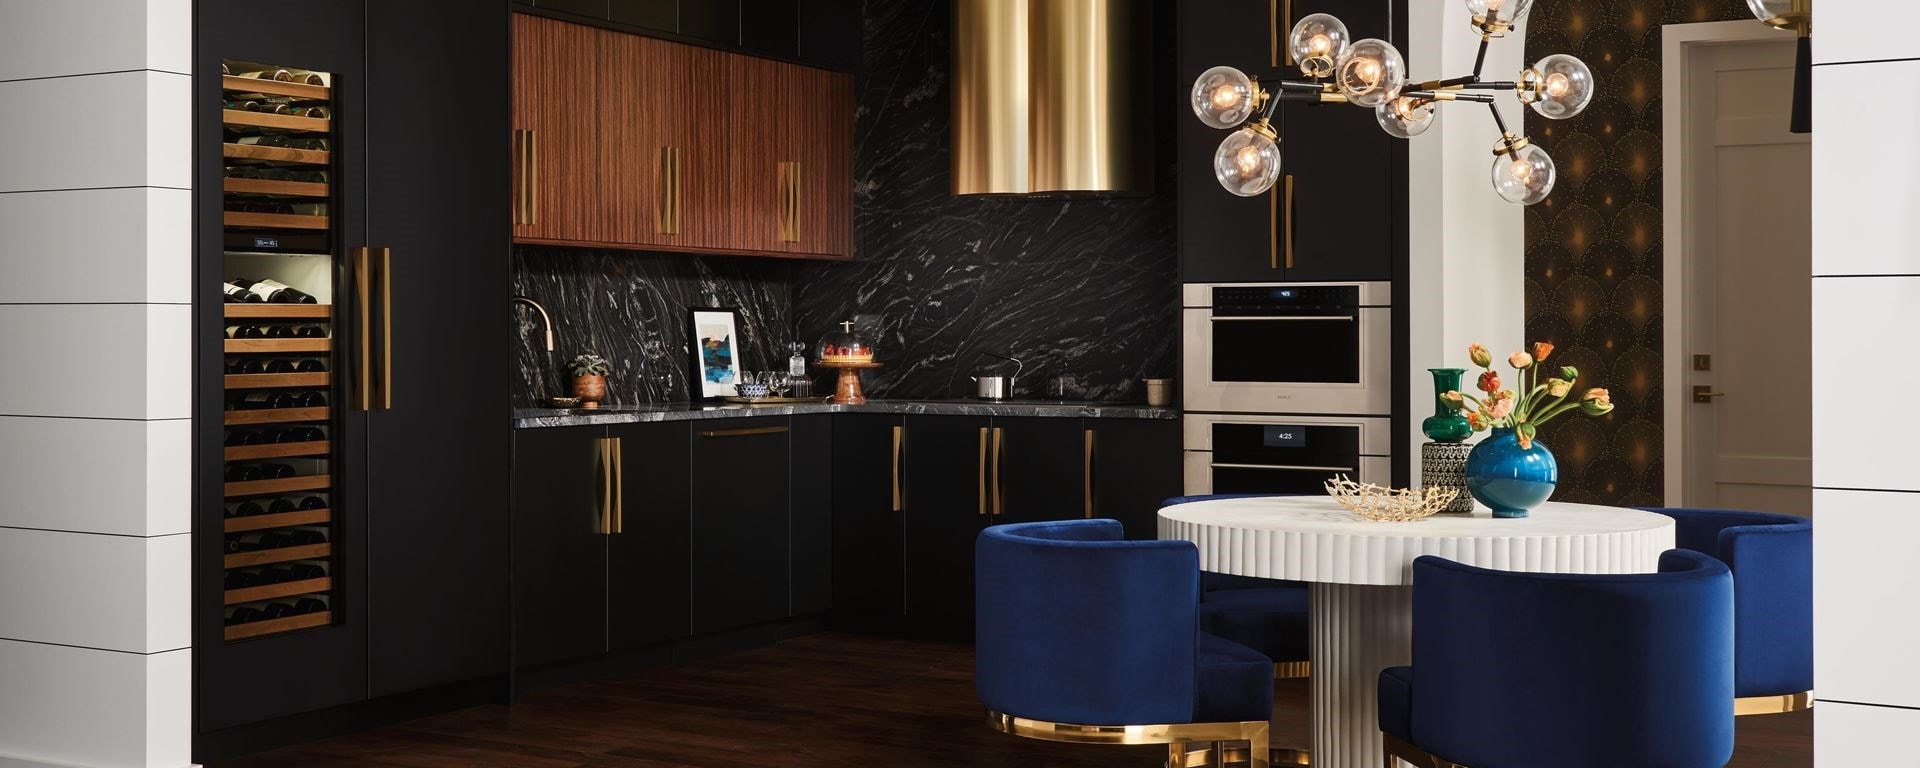 Modern high-rise custom kitchen design featuring Sub-Zero Designer Wine Storage, Wolf Contemporary Speed Oven and Cove Dishwasher